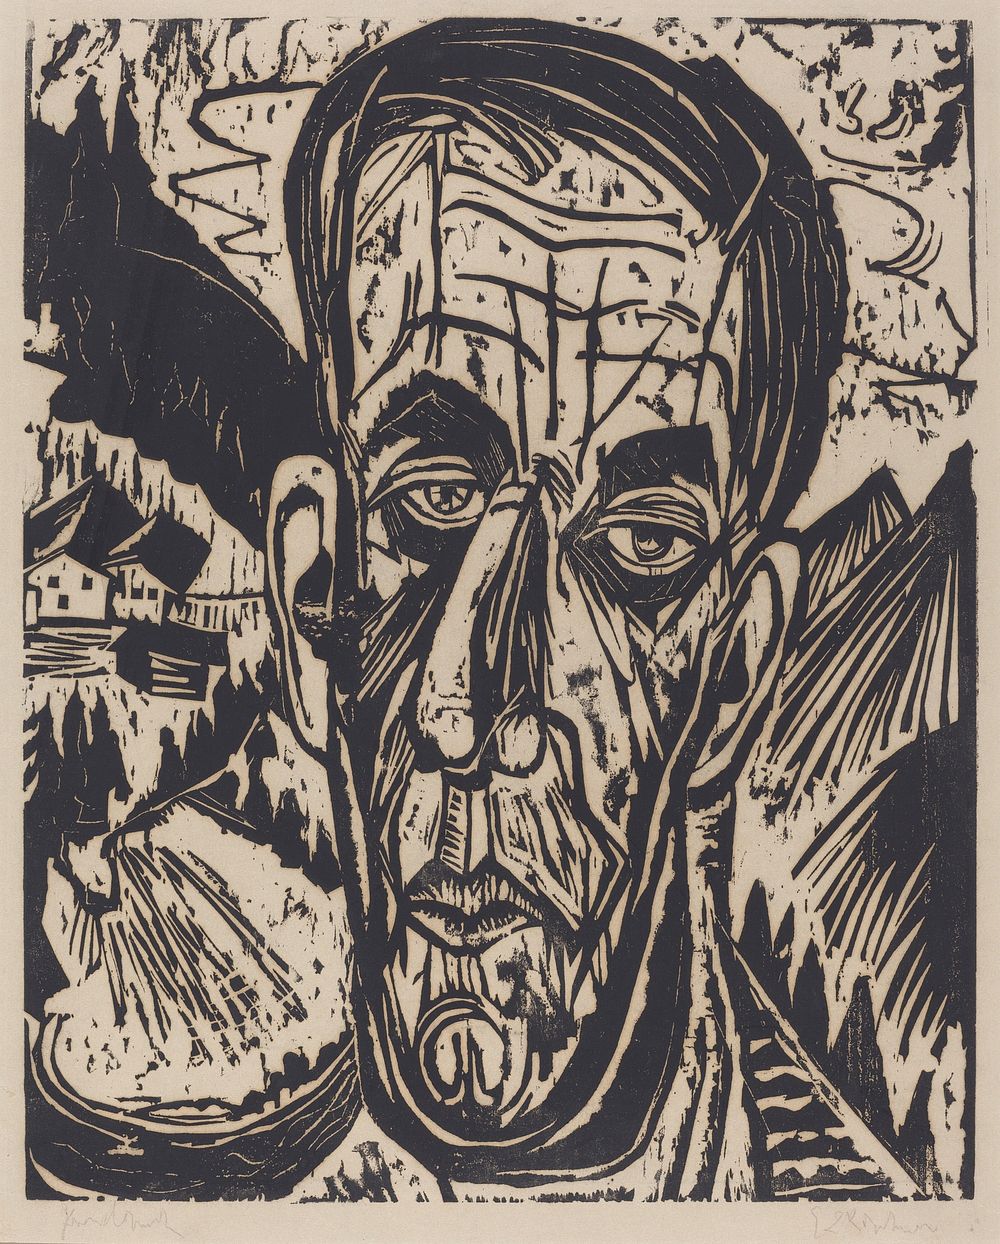 Head of van de Velde, Bright (1917) print in high resolution by Ernst Ludwig Kirchner.  